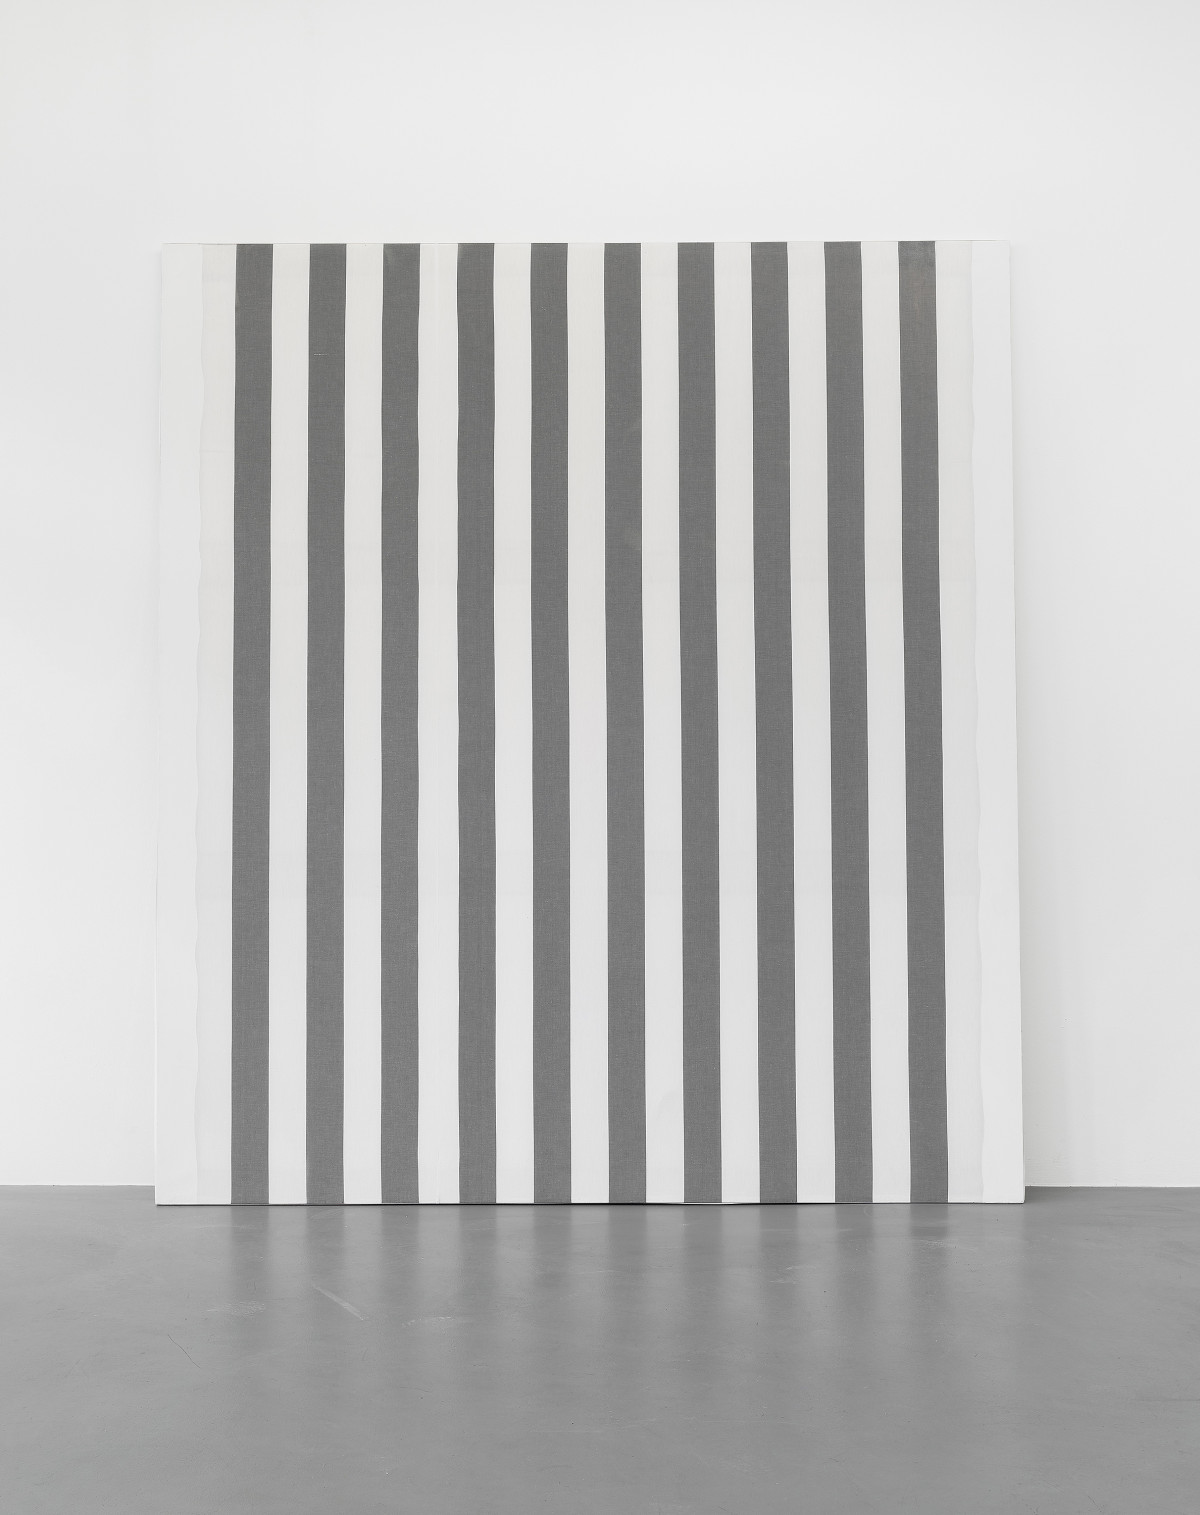 Daniel Buren, ‘Peinture acrylique blanche sur tissu rayé blanc et noir’, 1966, Acrylic on awning fabric